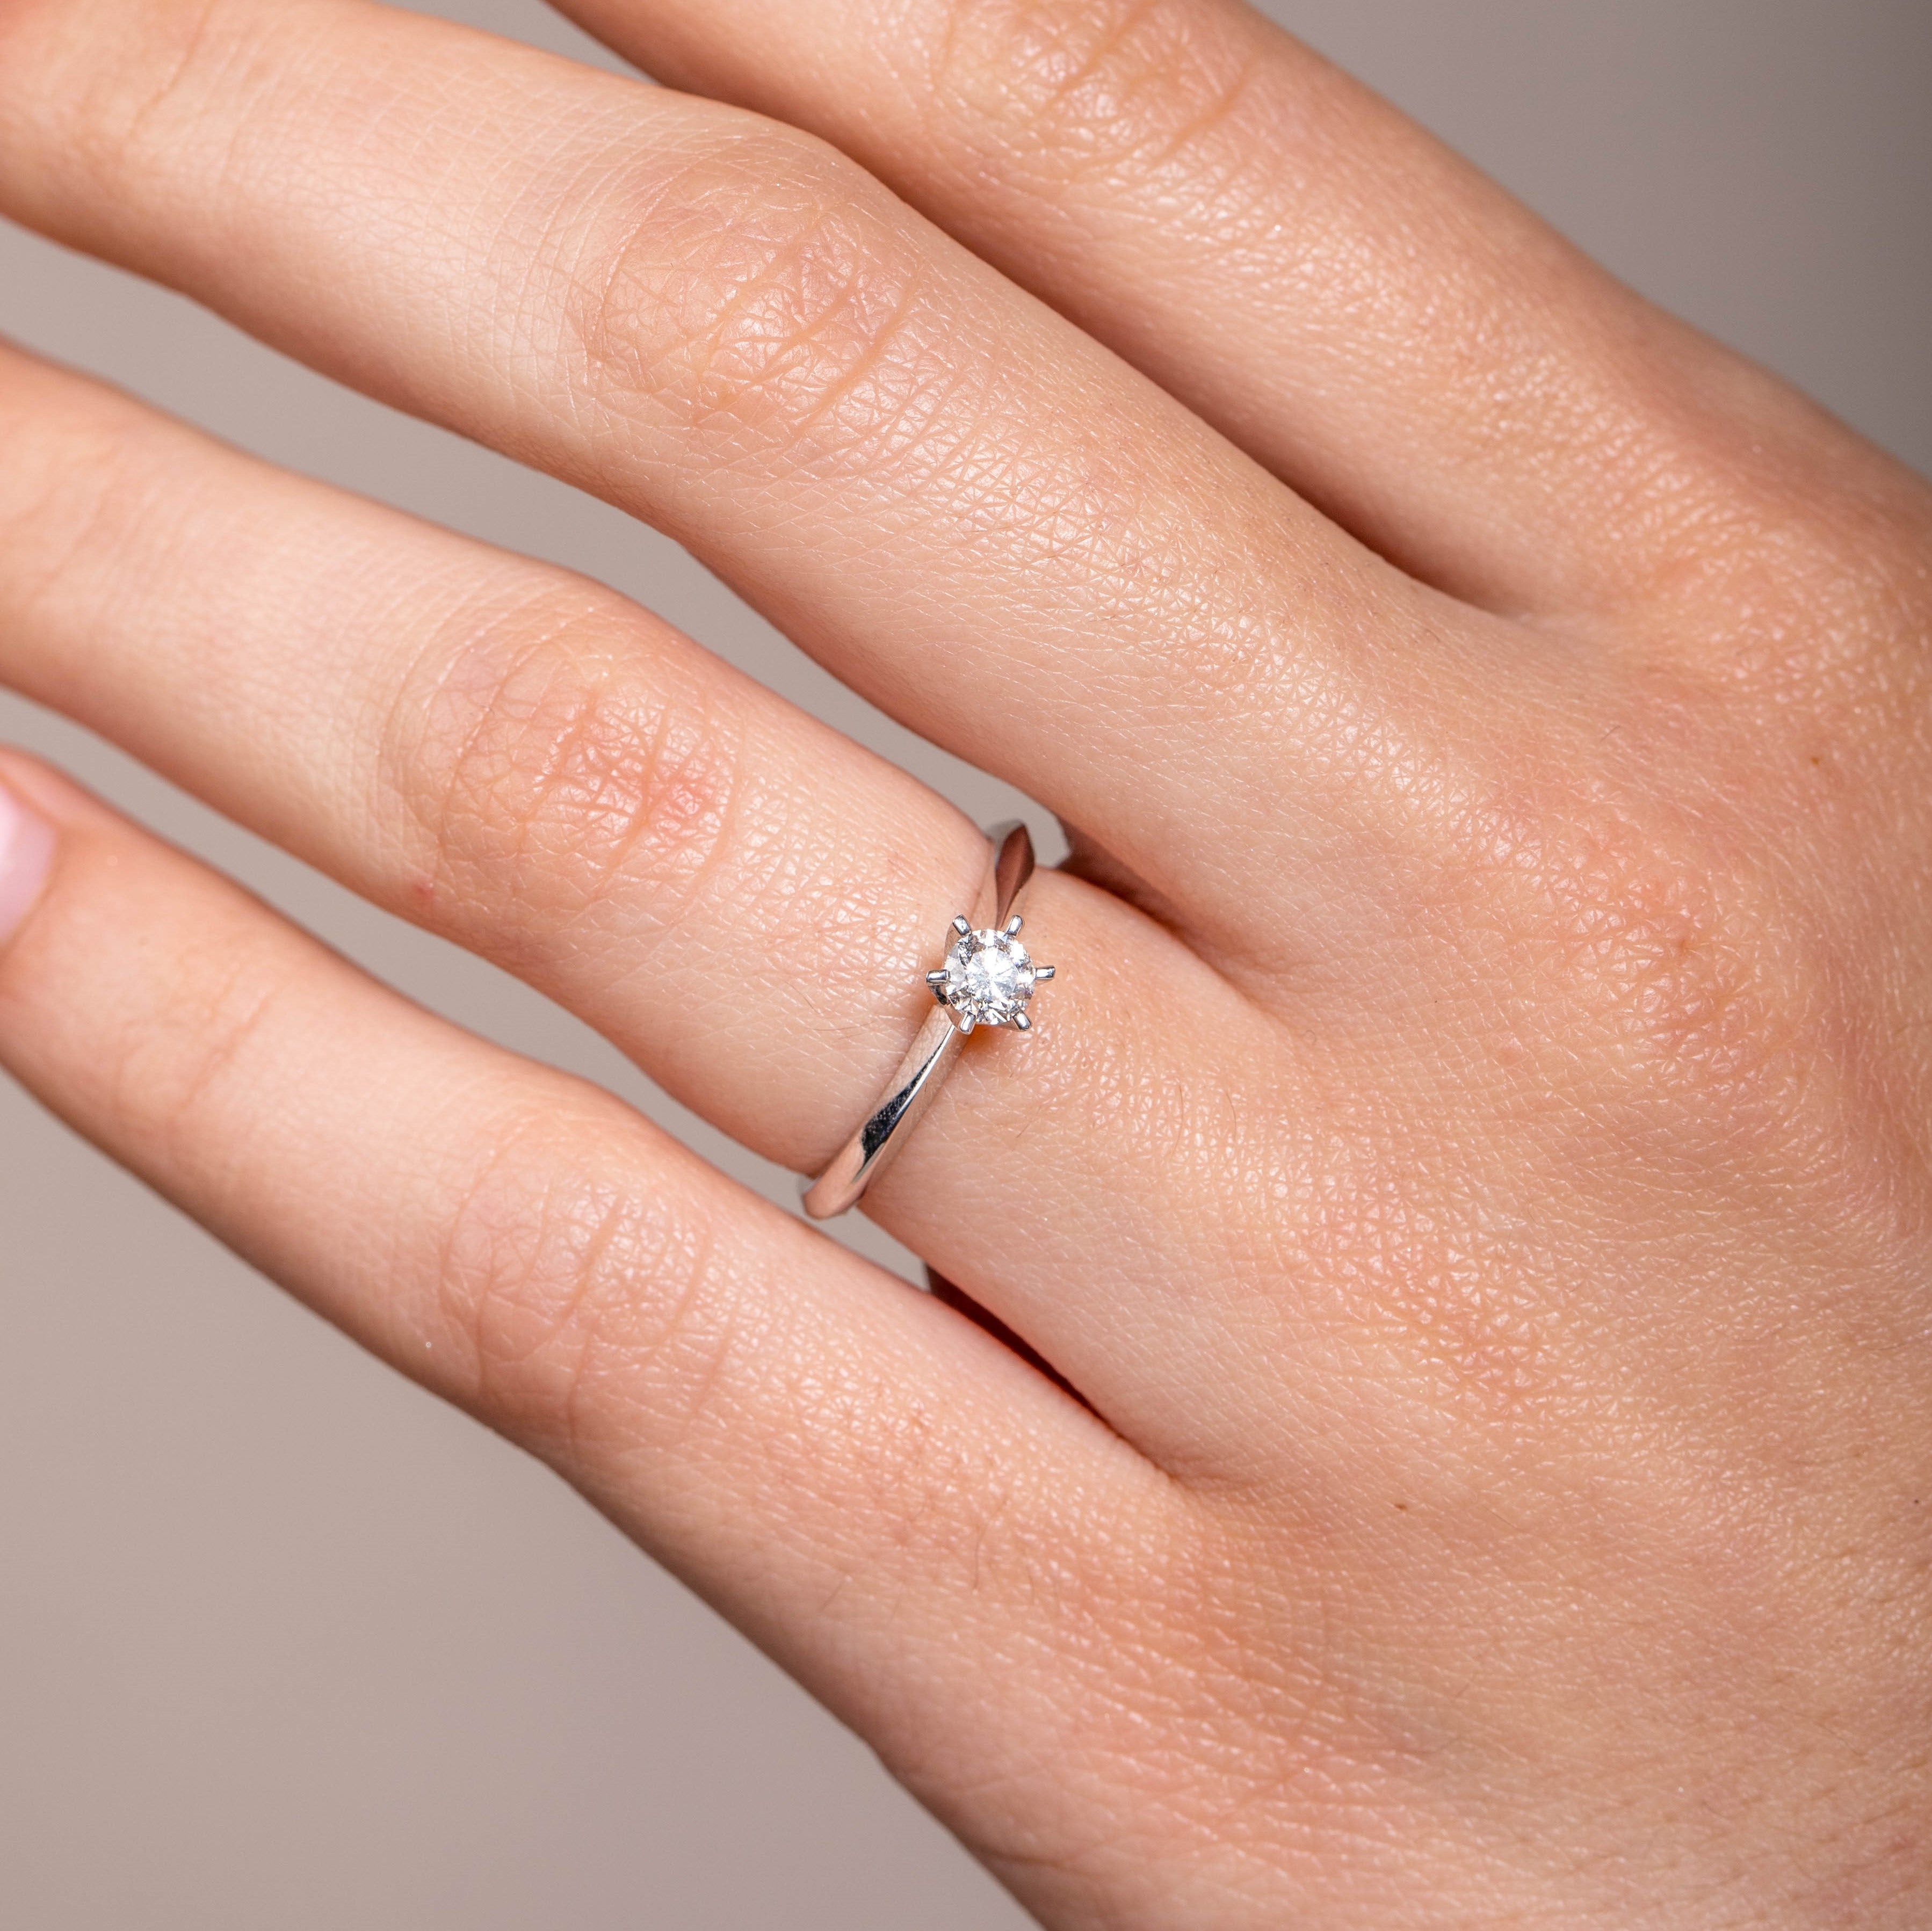 Engagement Diamond 0.27ct Ring 18K White Gold